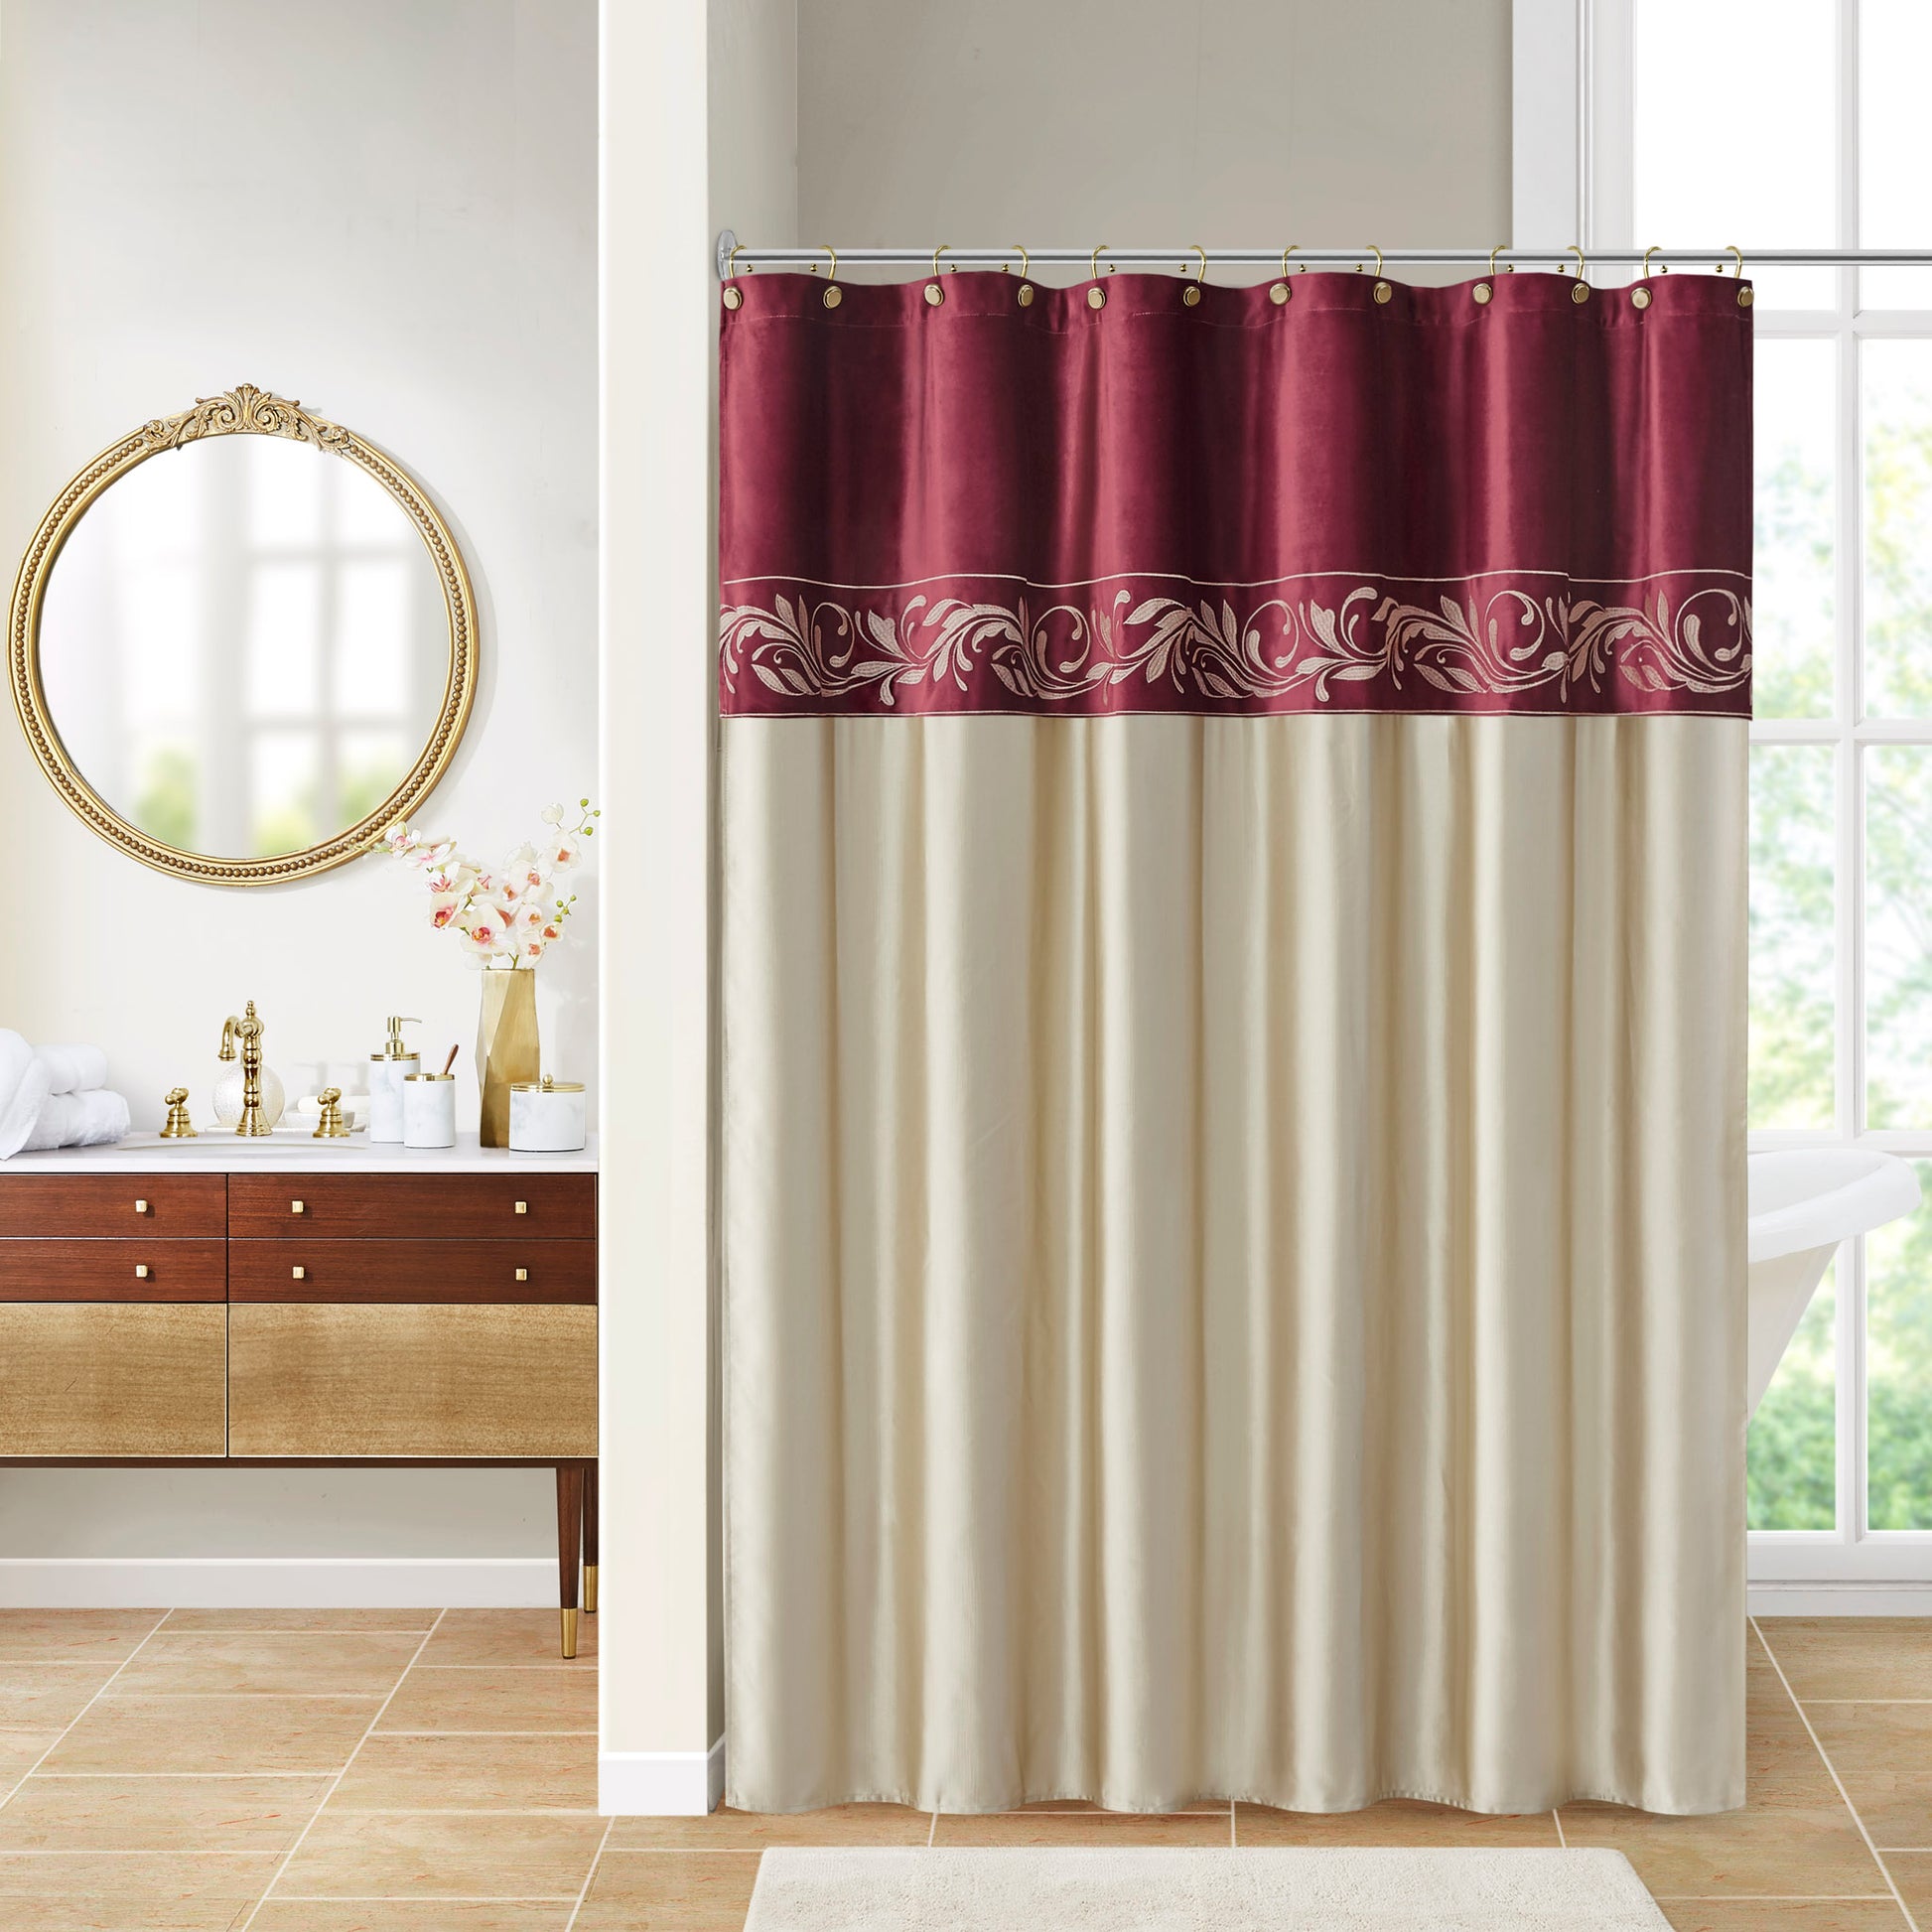 Croscill Classics Embroidery Shower Curtain